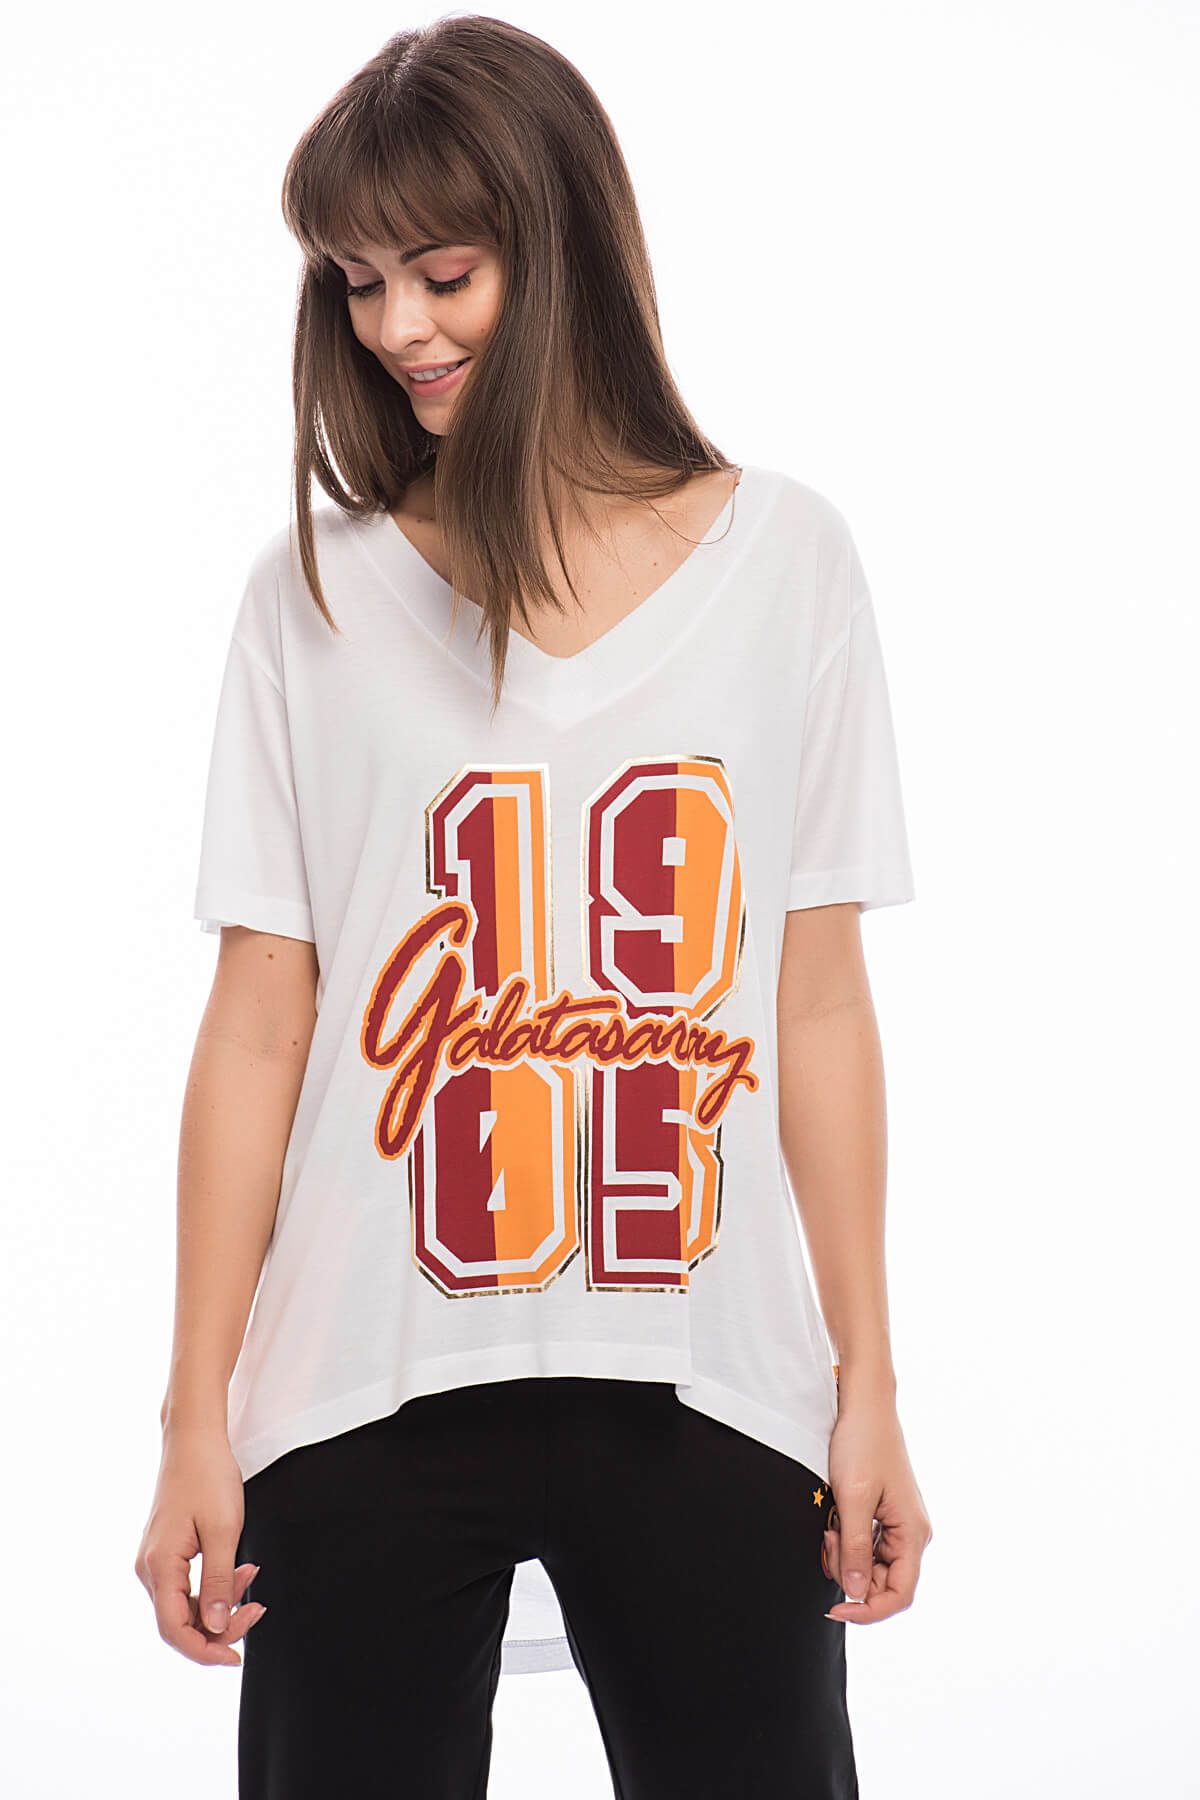 Galatasaray Galatasaray Kadın Beyaz T-Shirt - Y023-K80155